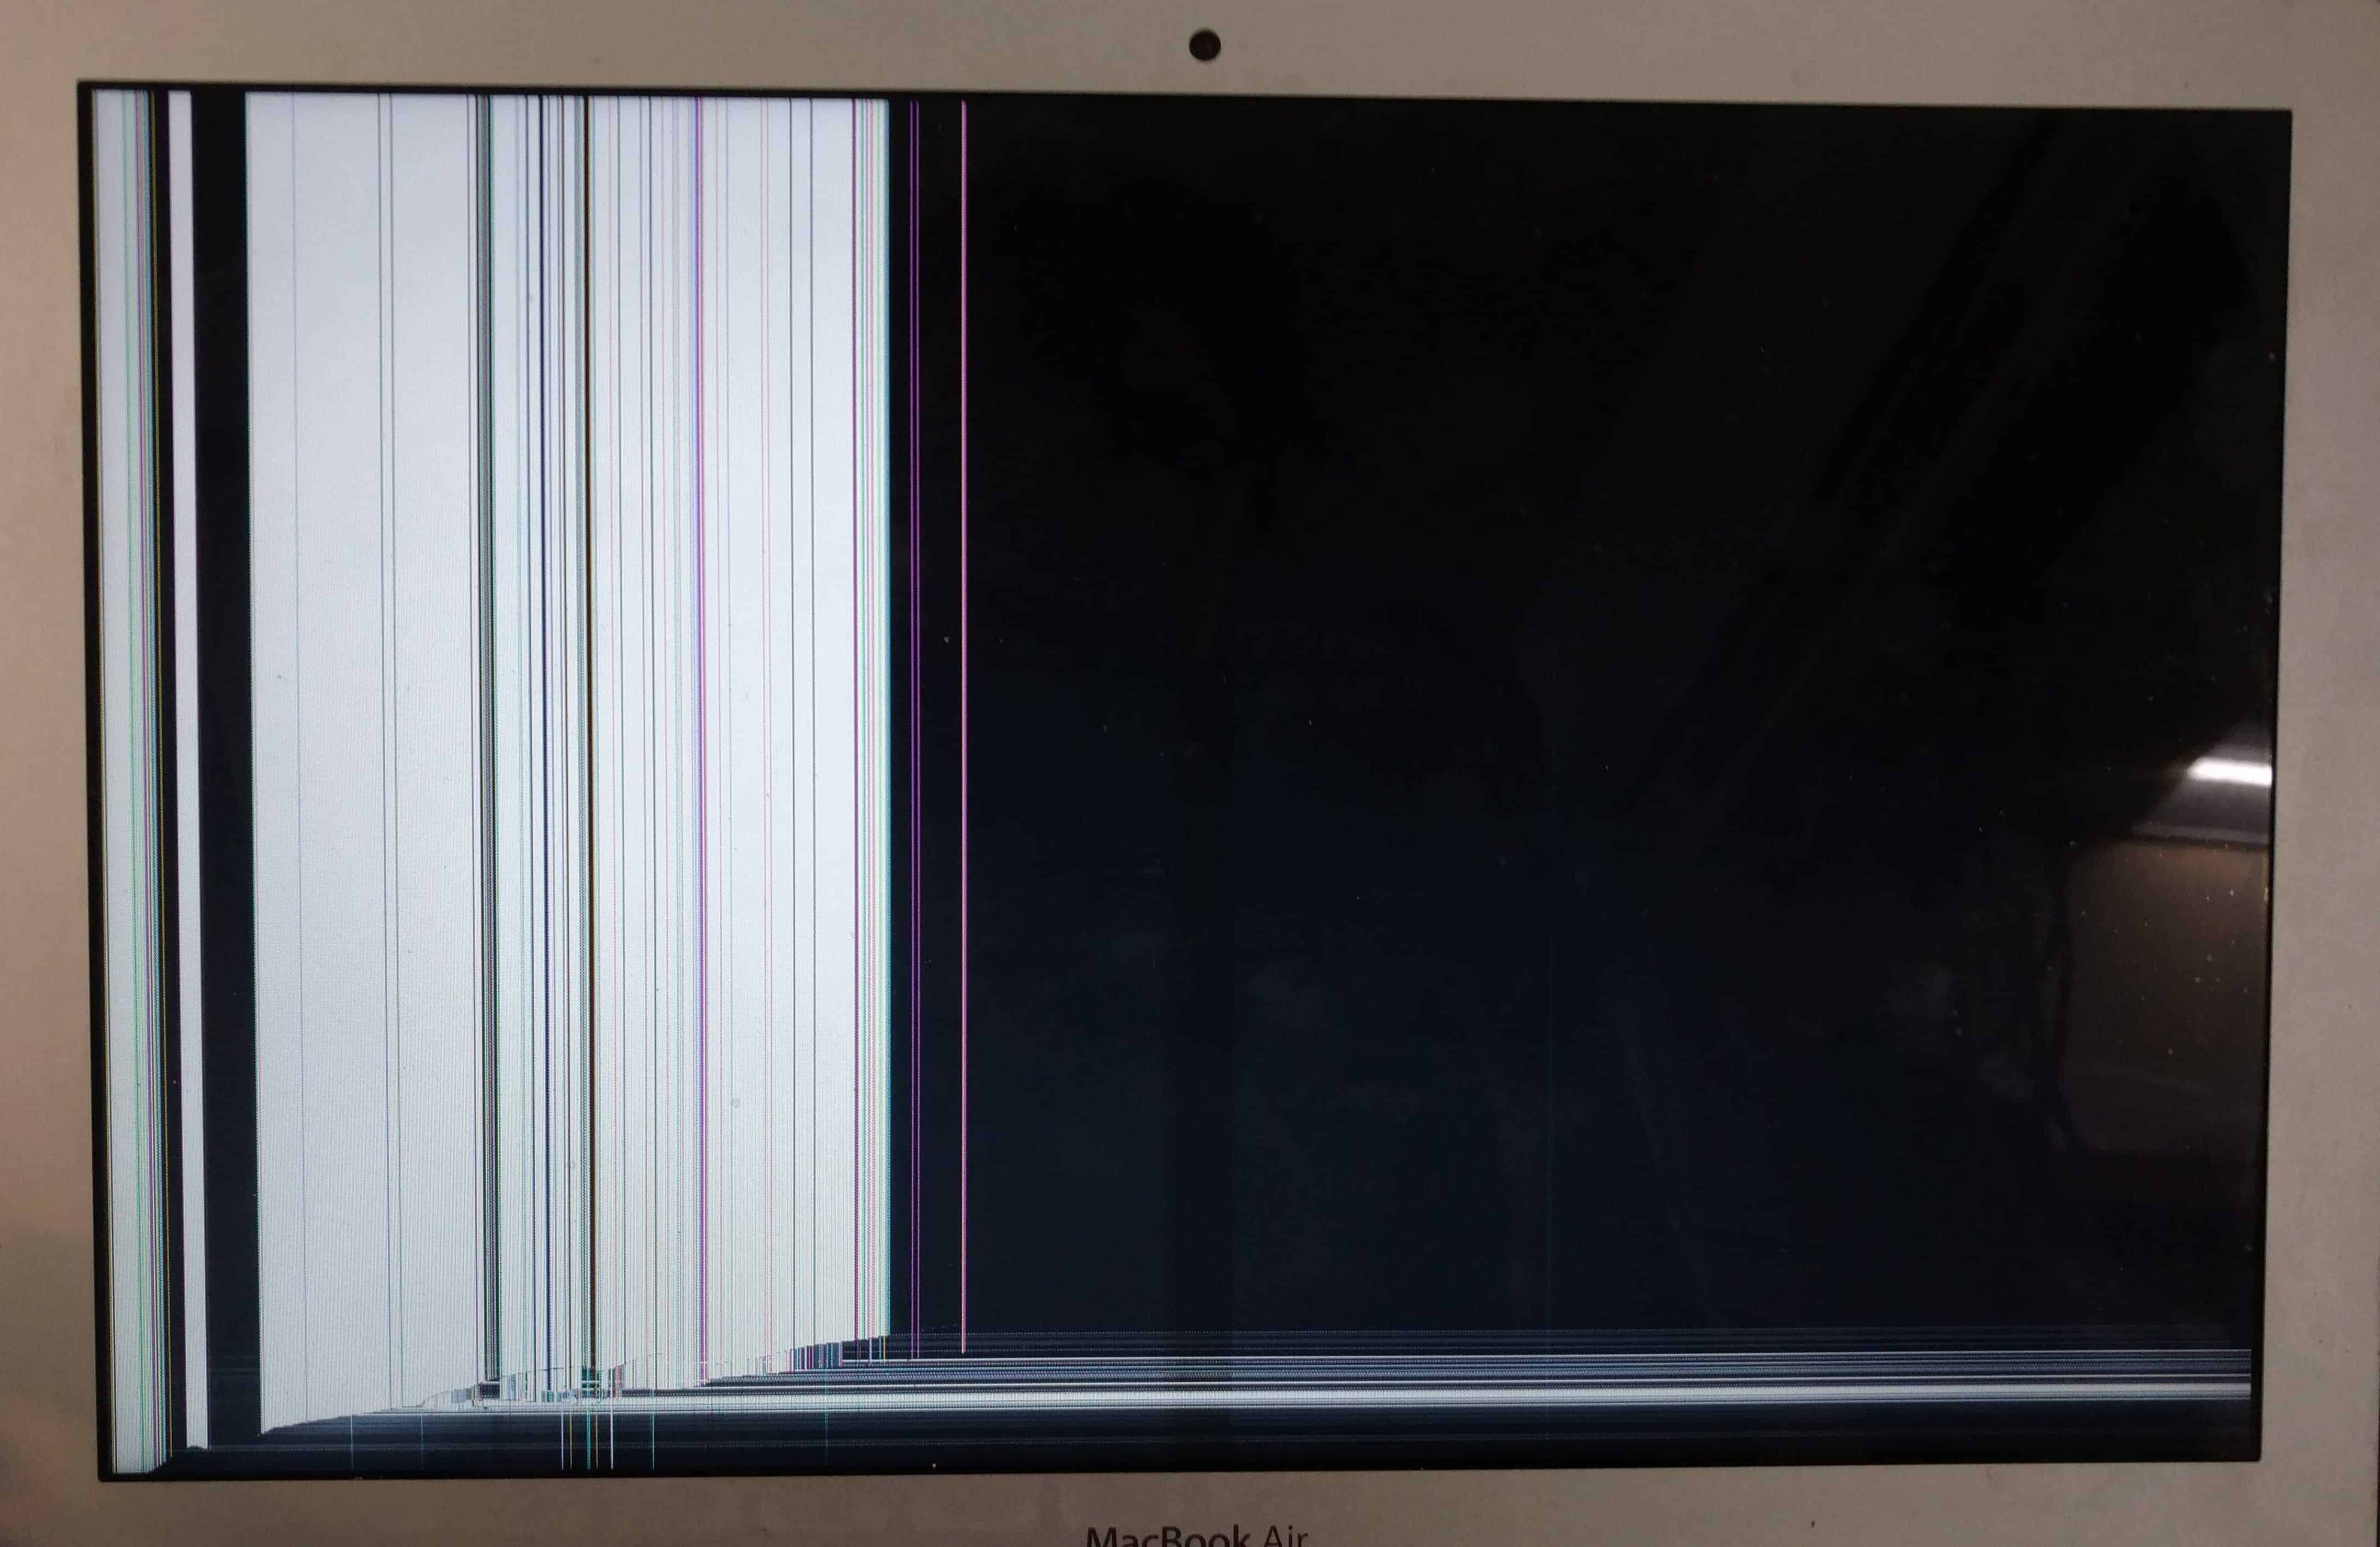 MacBook Air Cracked Screen